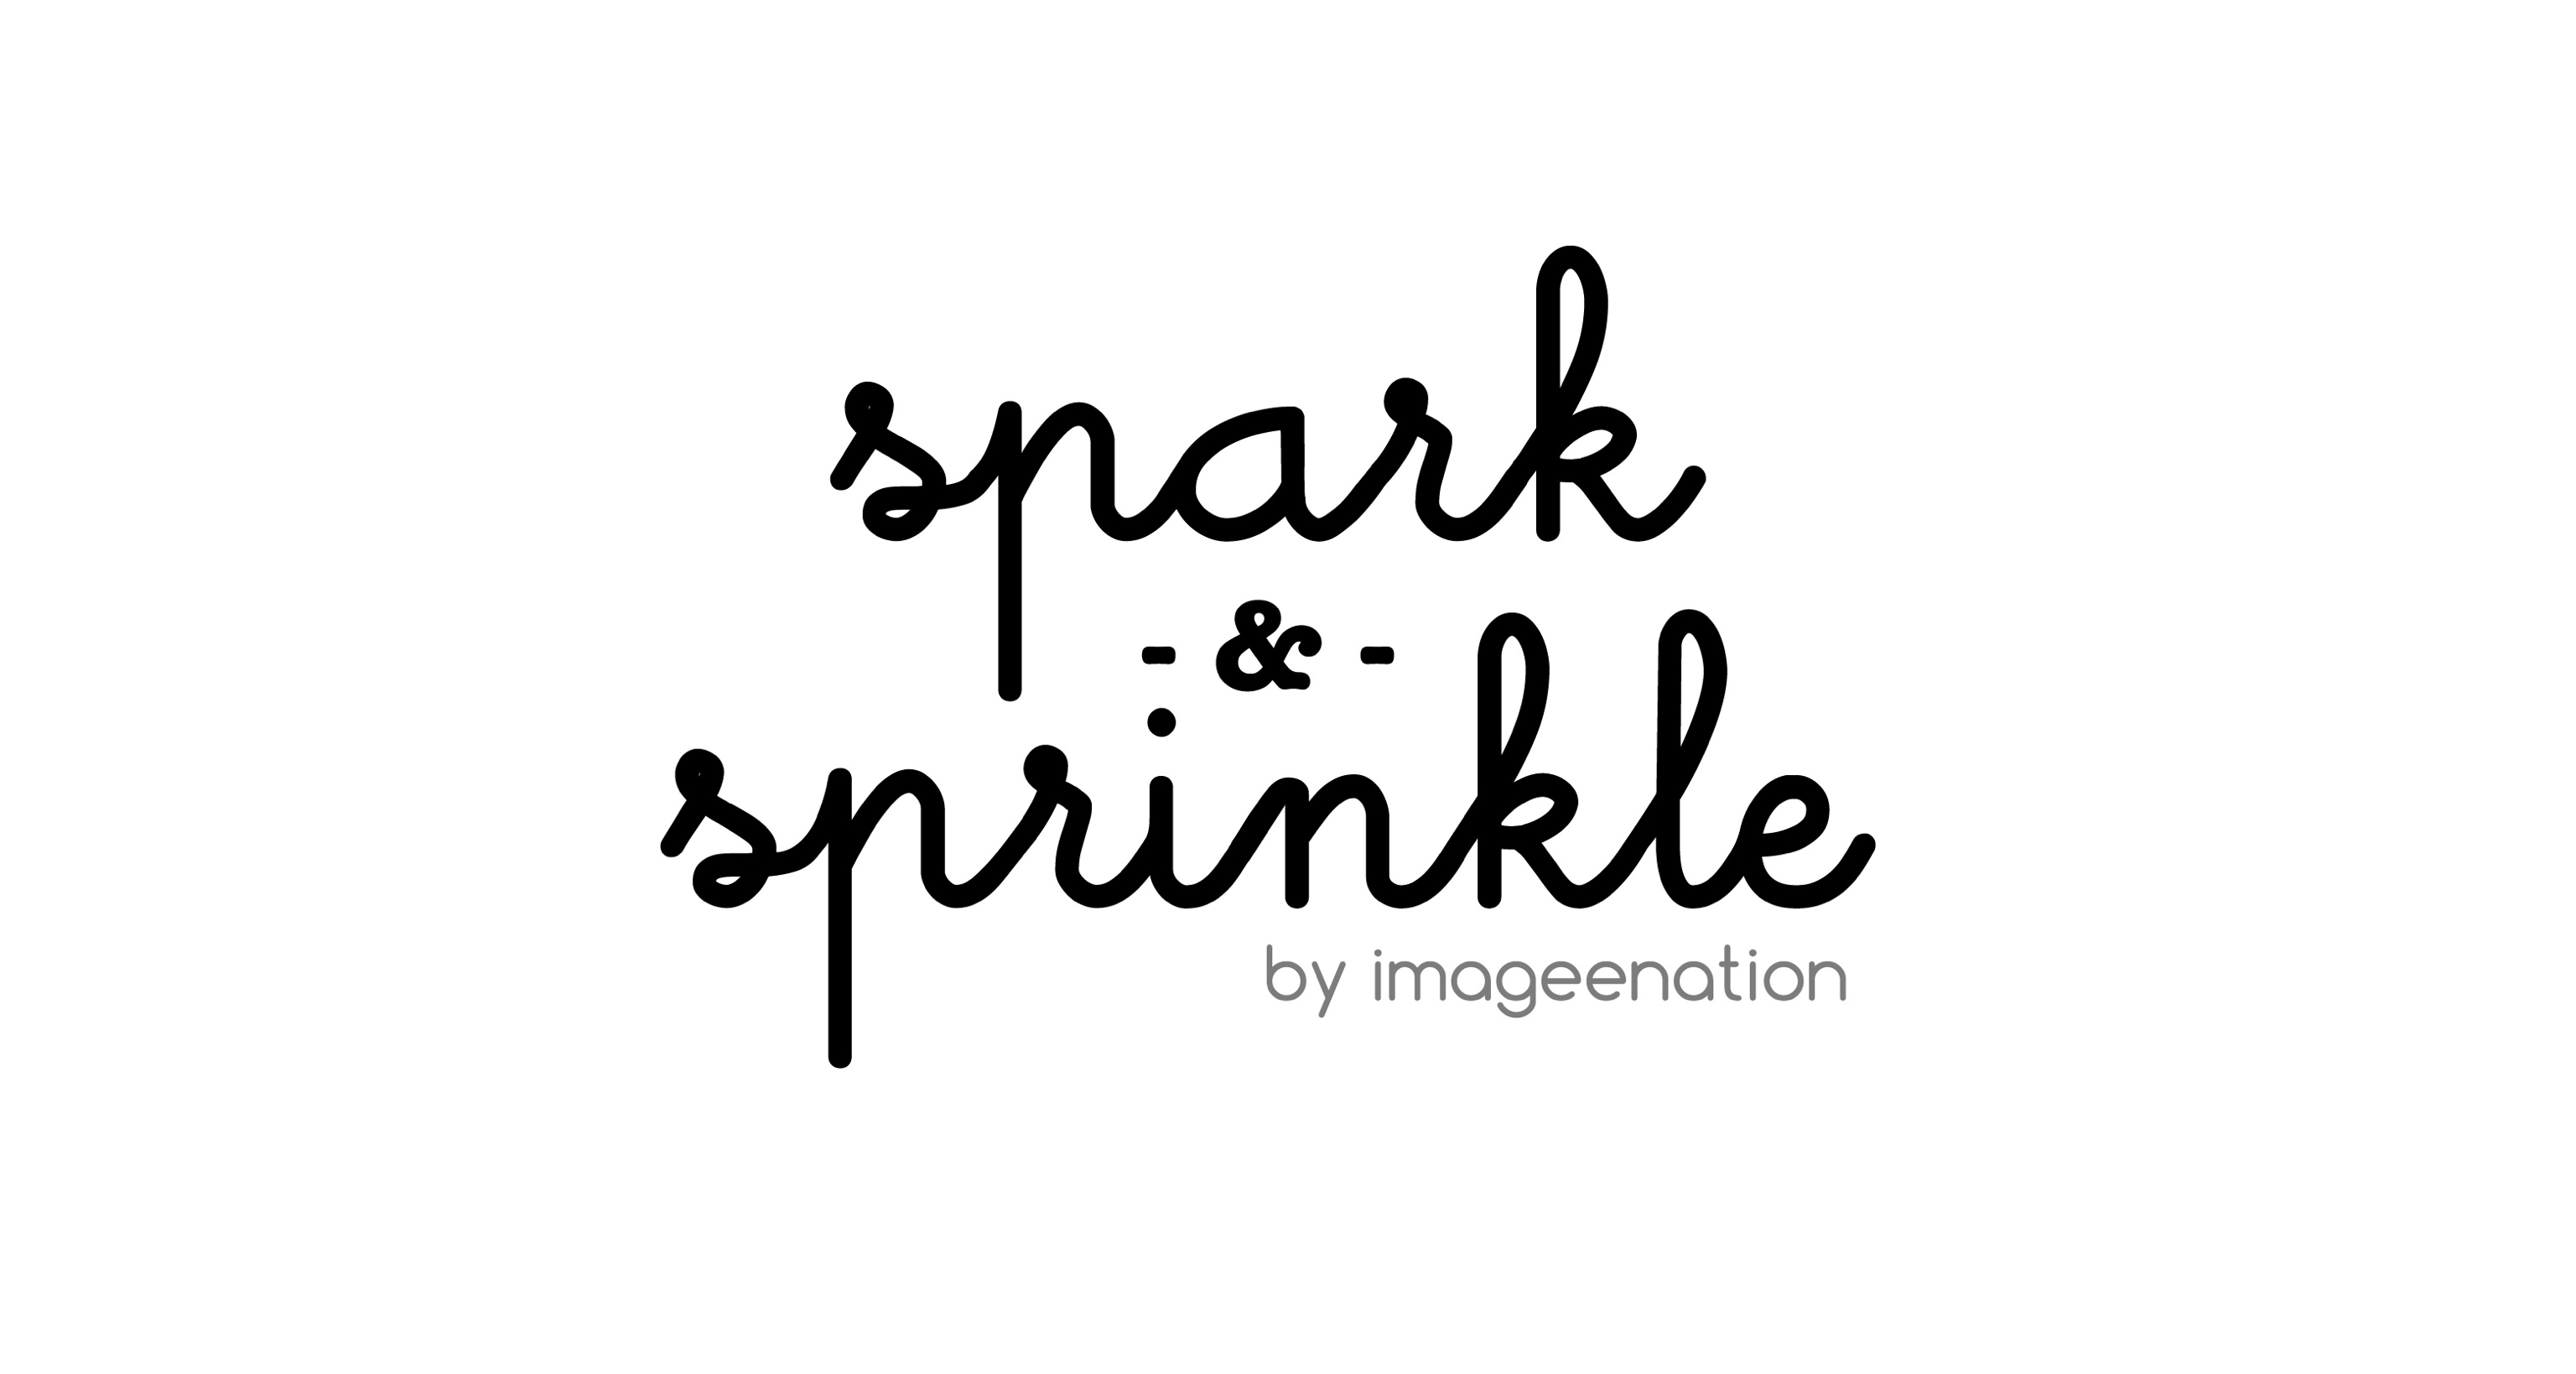 Spark and Sprinkle